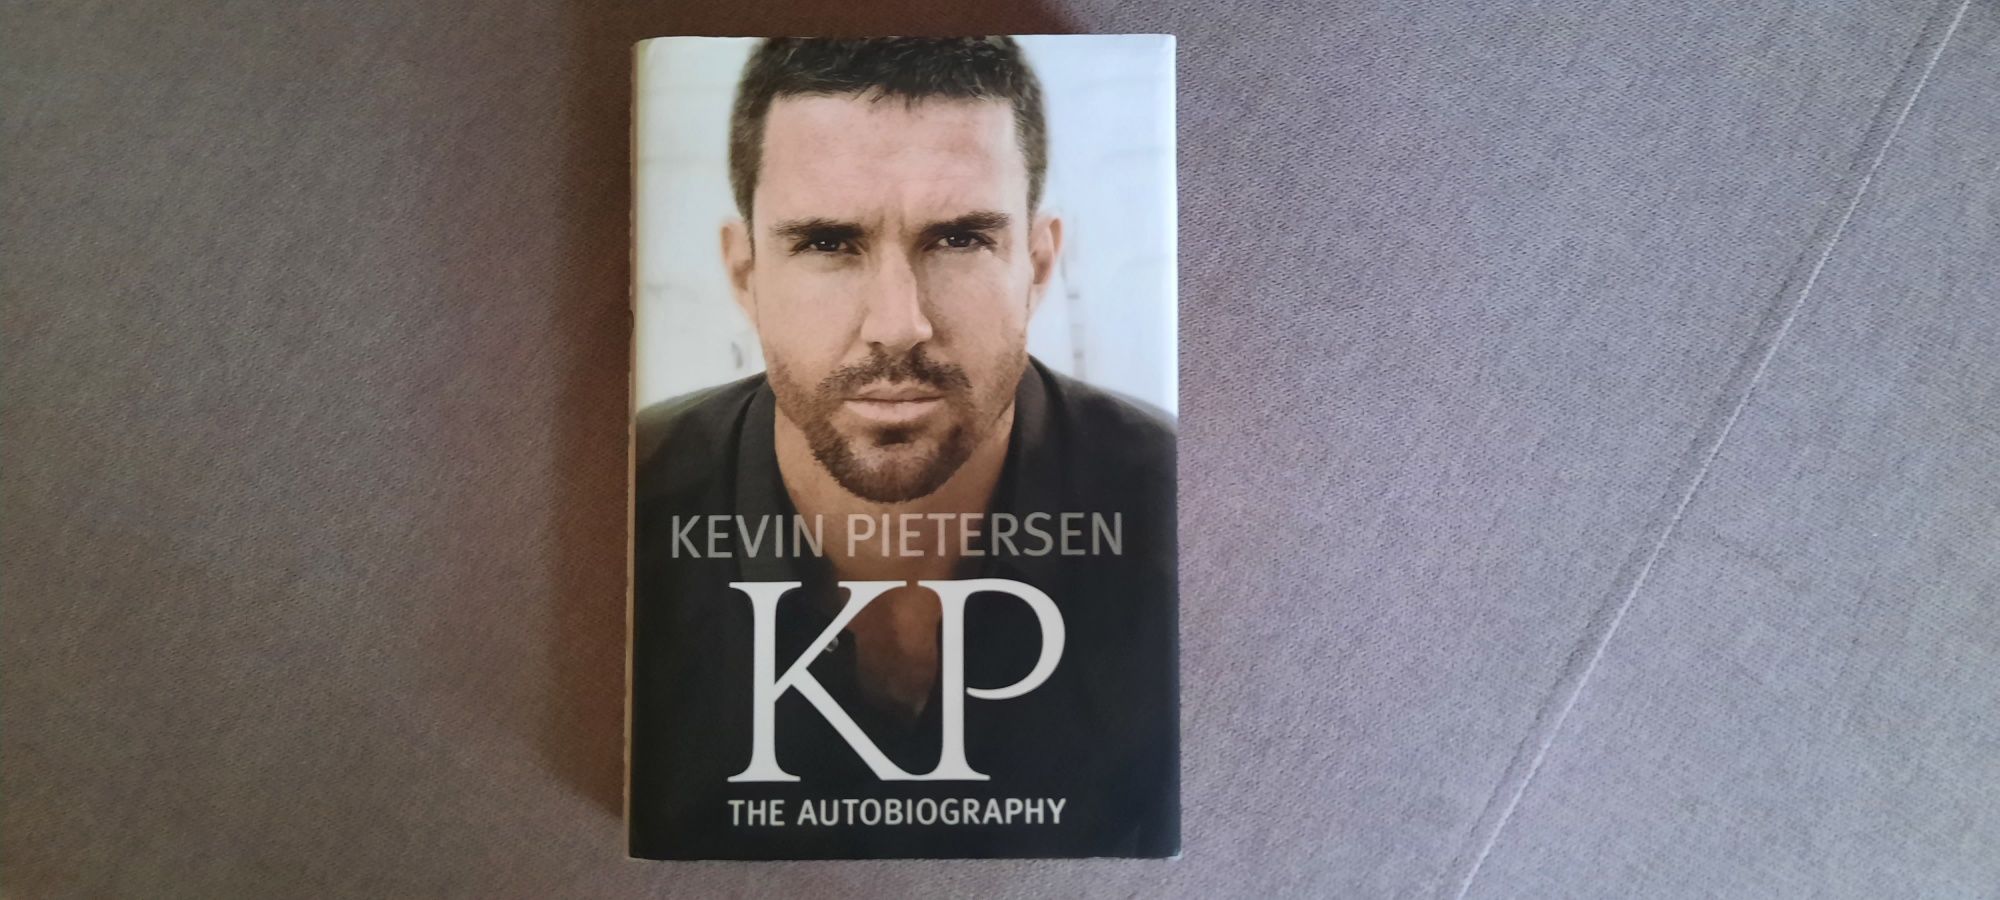 Kevin Pietersen KP Autobiography